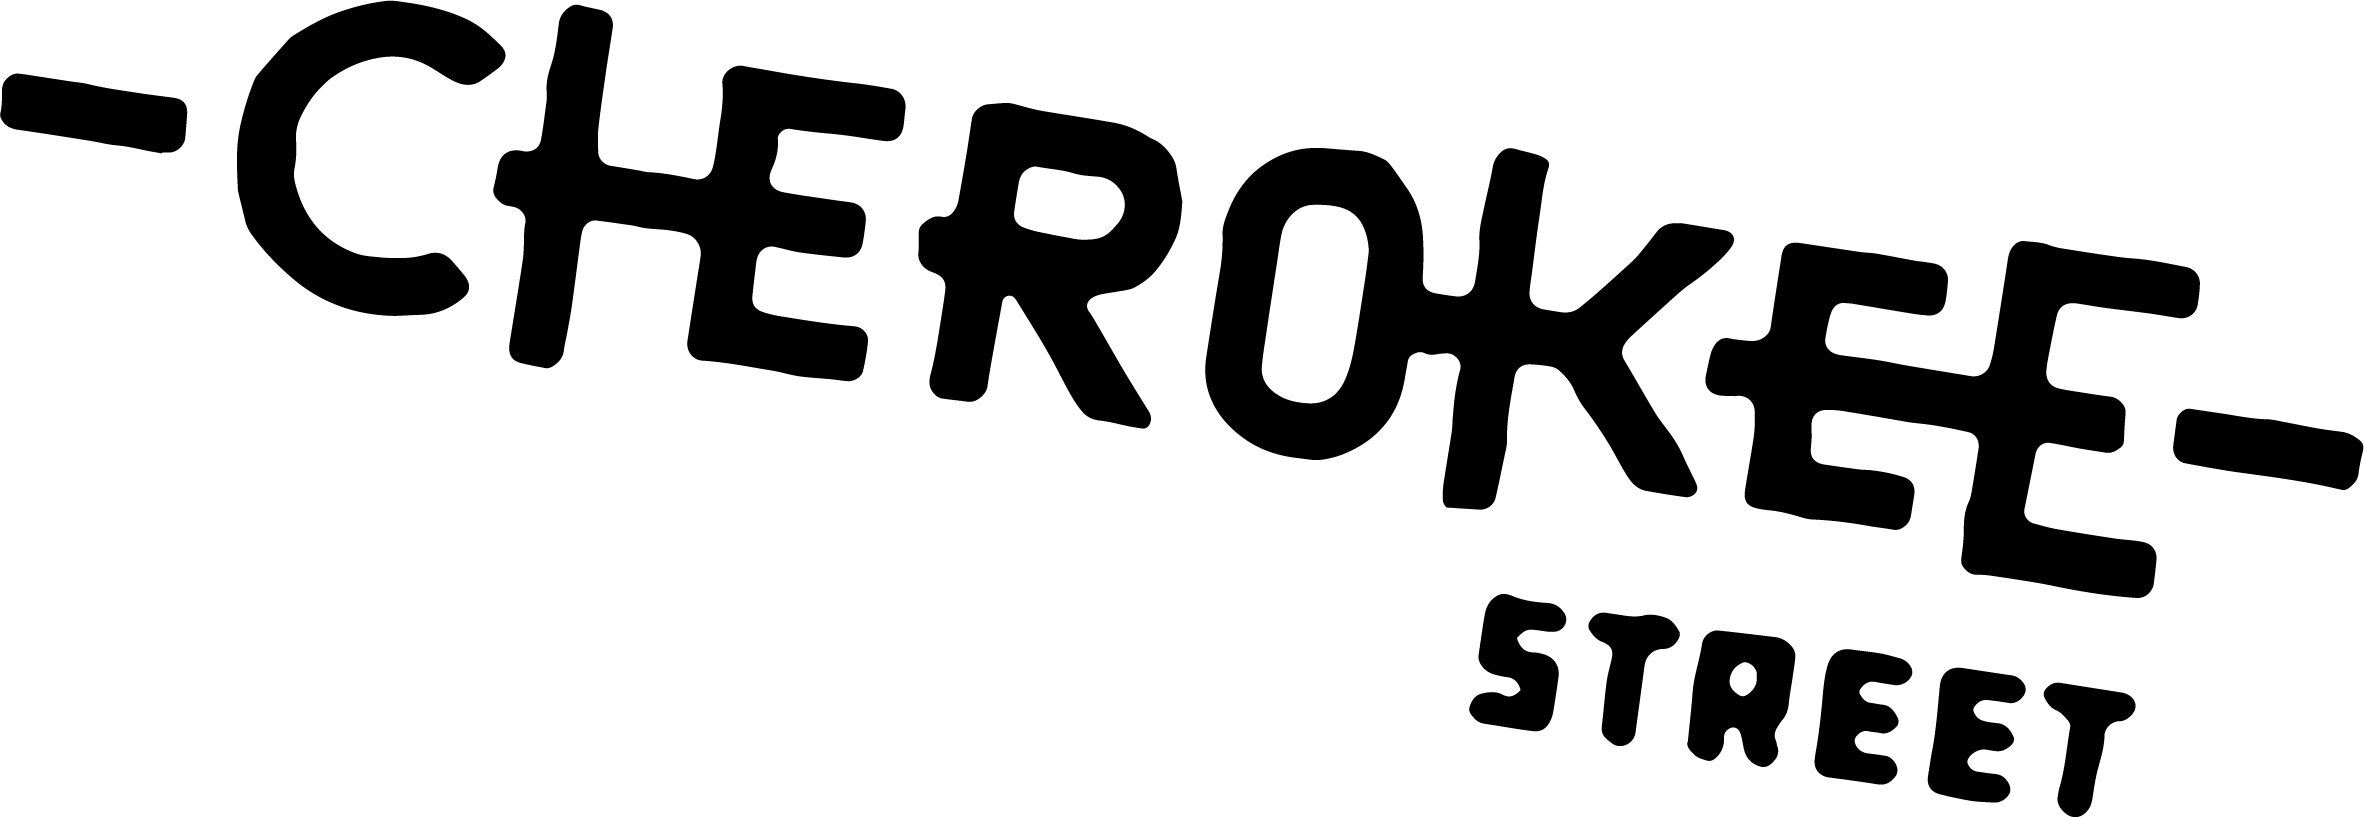 Cherokee_primary-logo_BLK.jpg